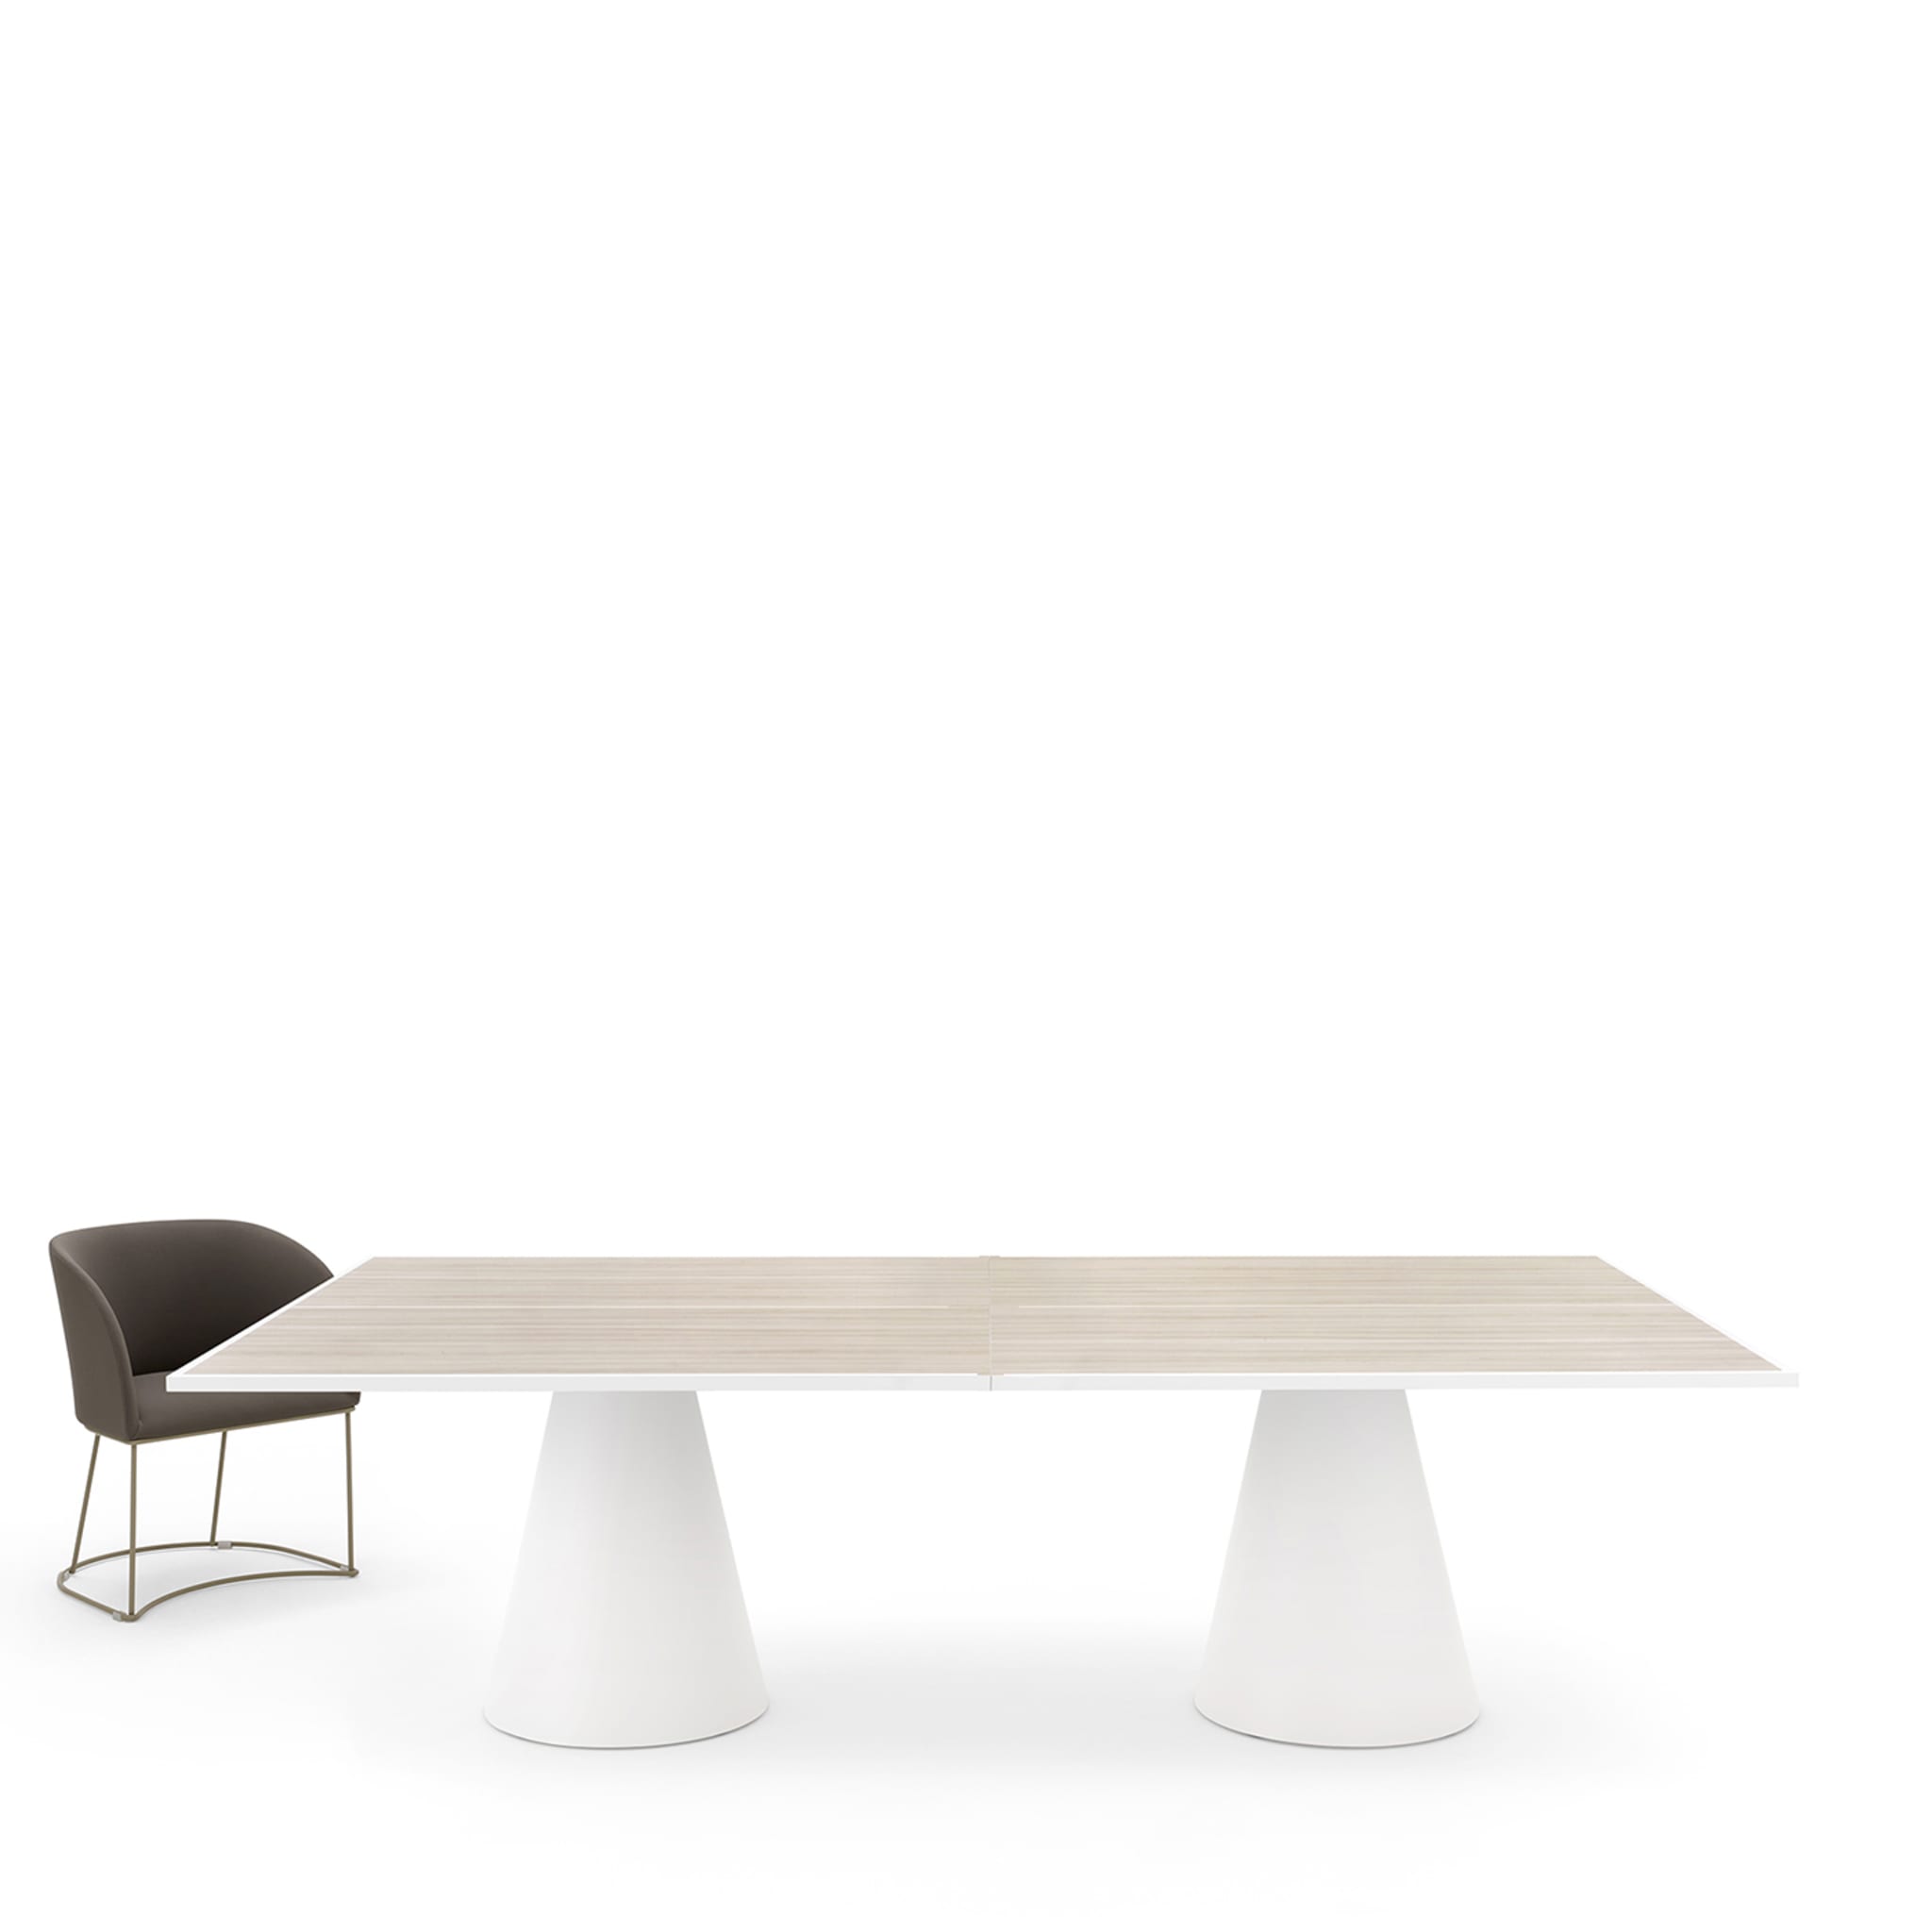 Dada Ping Pong Table by Basaglia + Rota Nodari - Alternative view 3